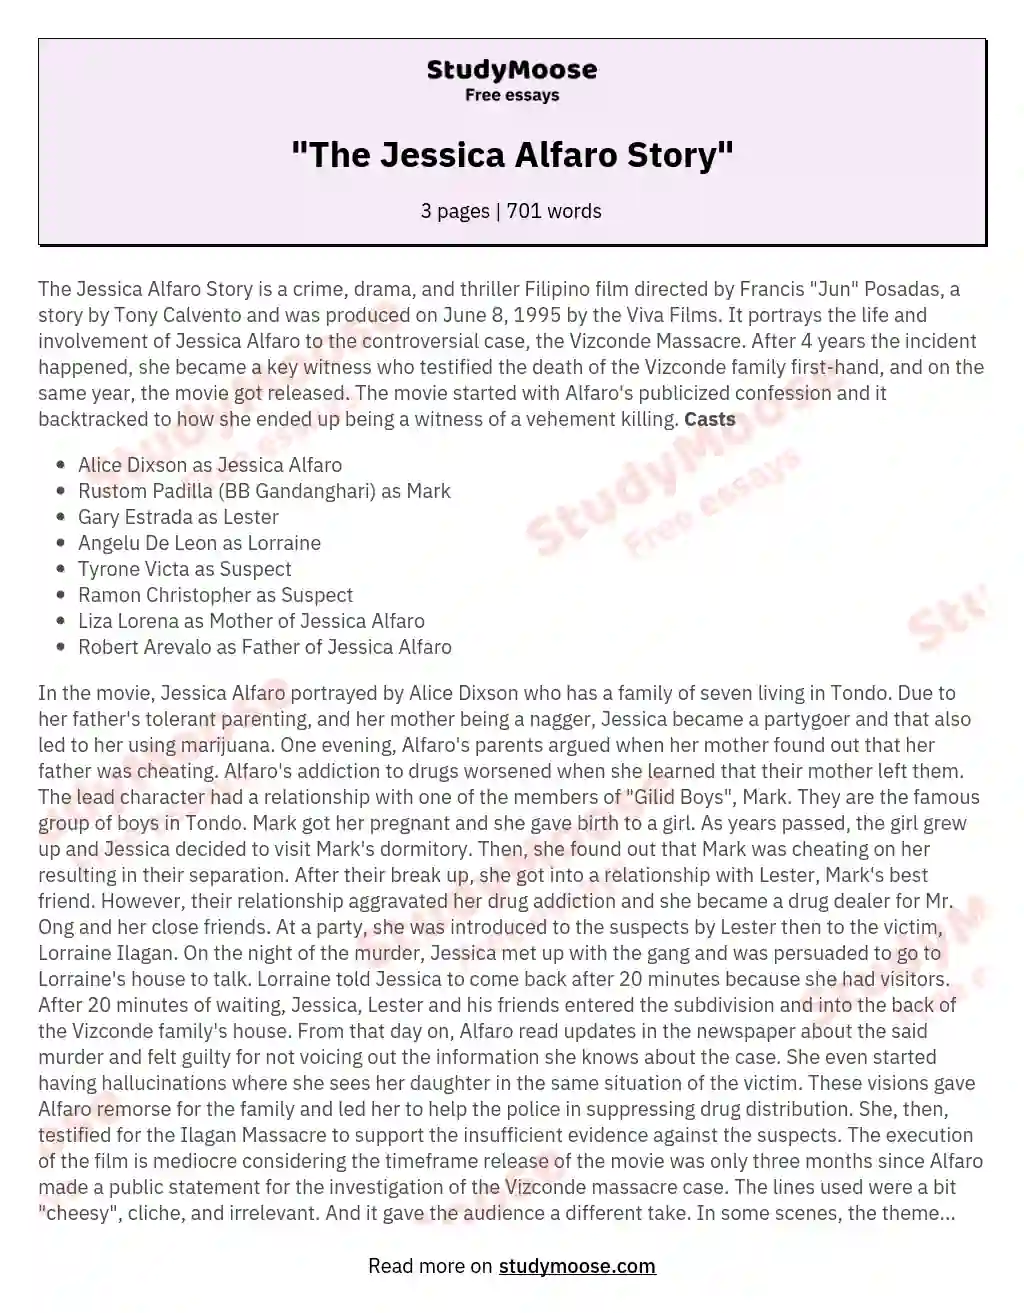 "The Jessica Alfaro Story" essay